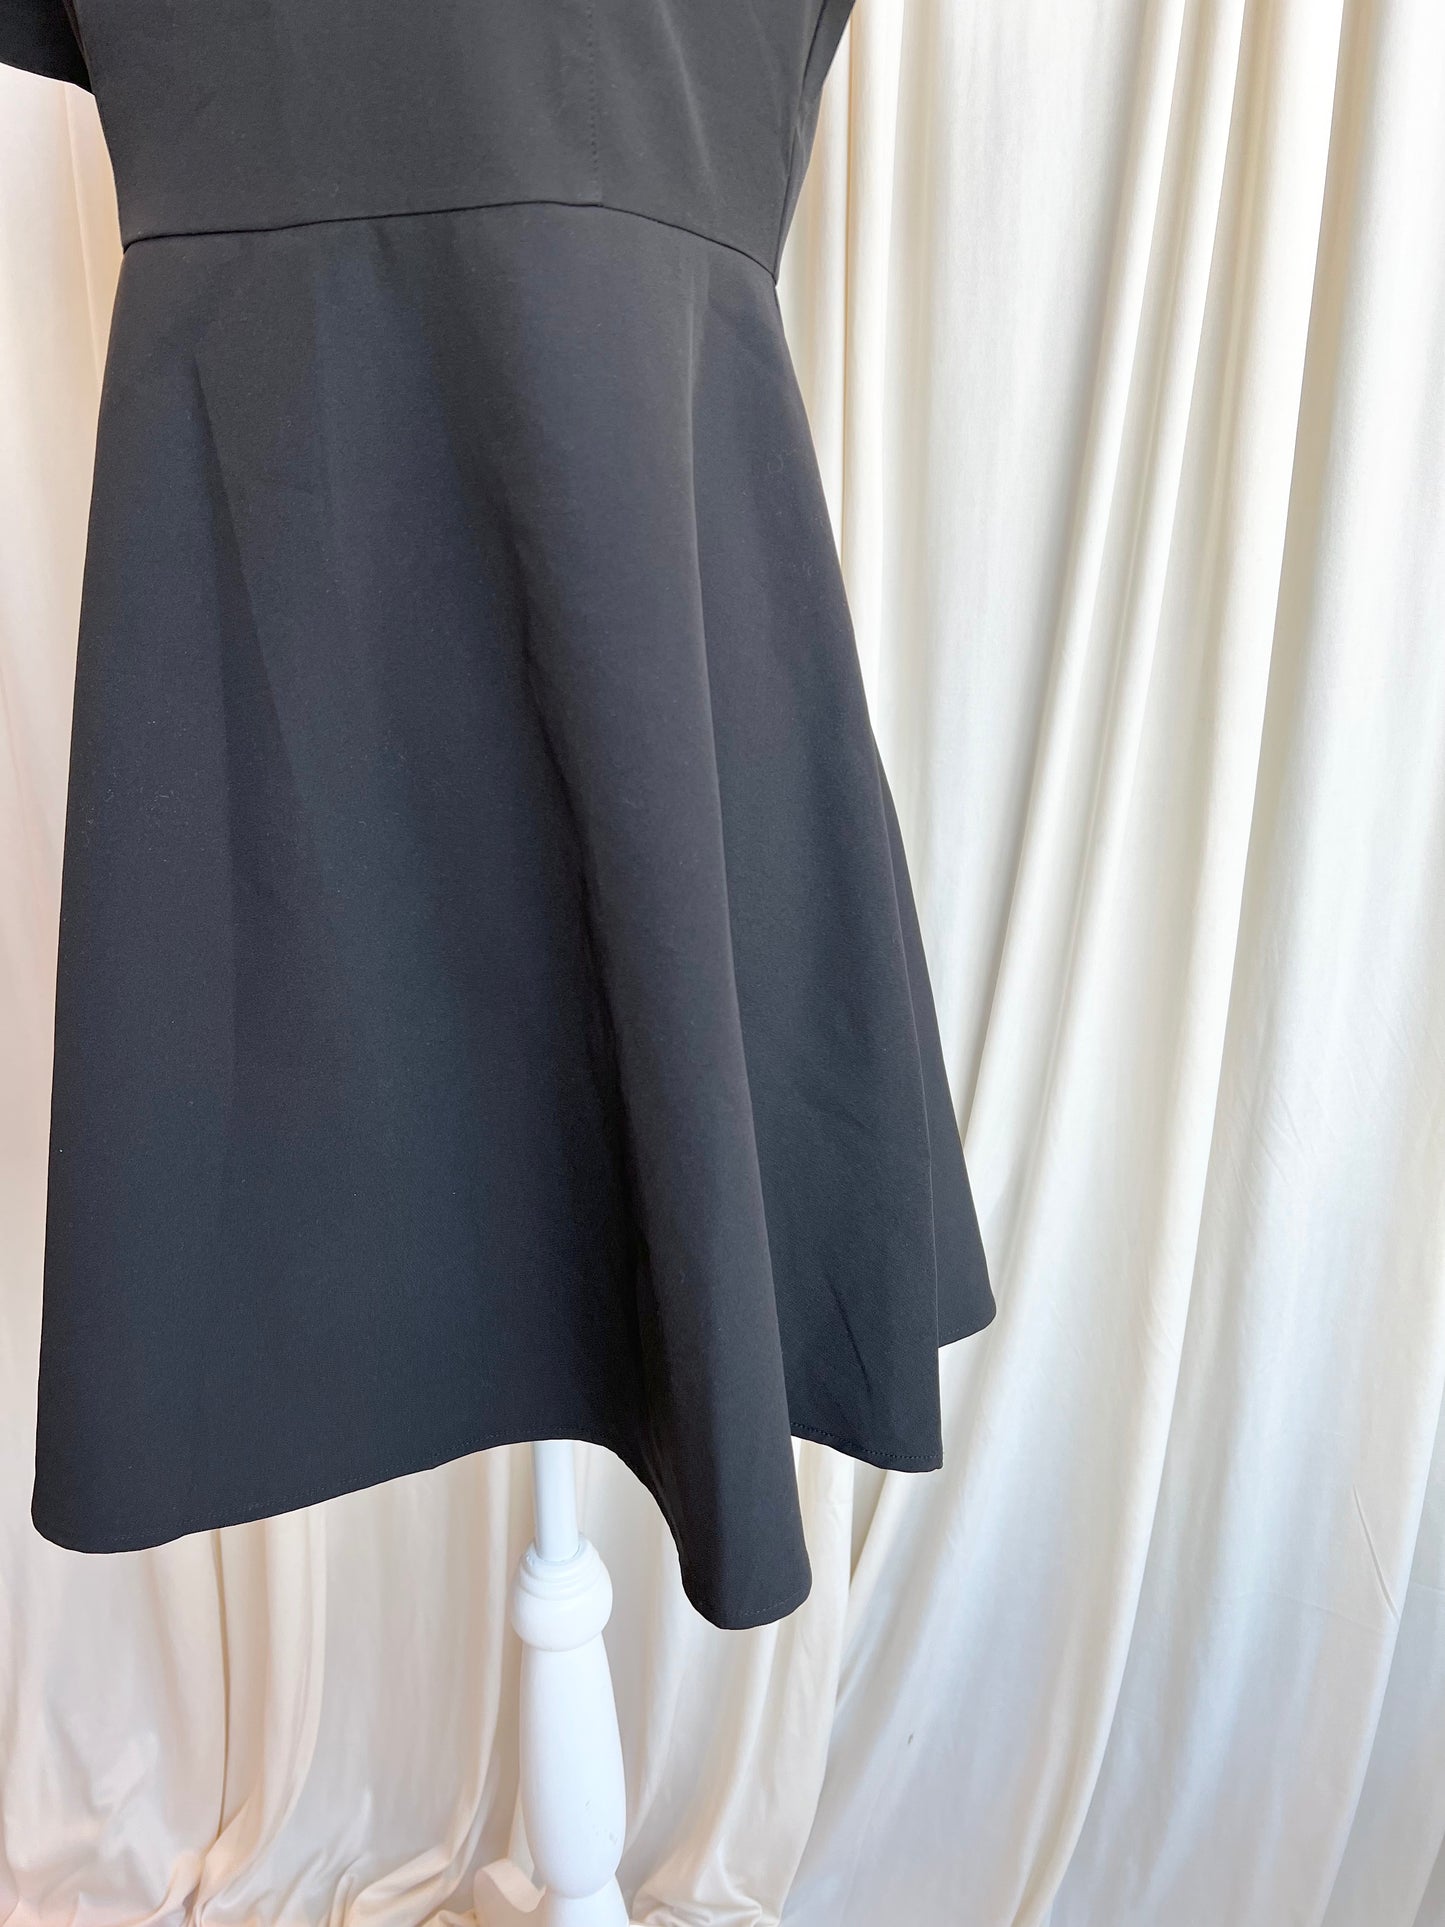 Black Lace Top Dress - Medium